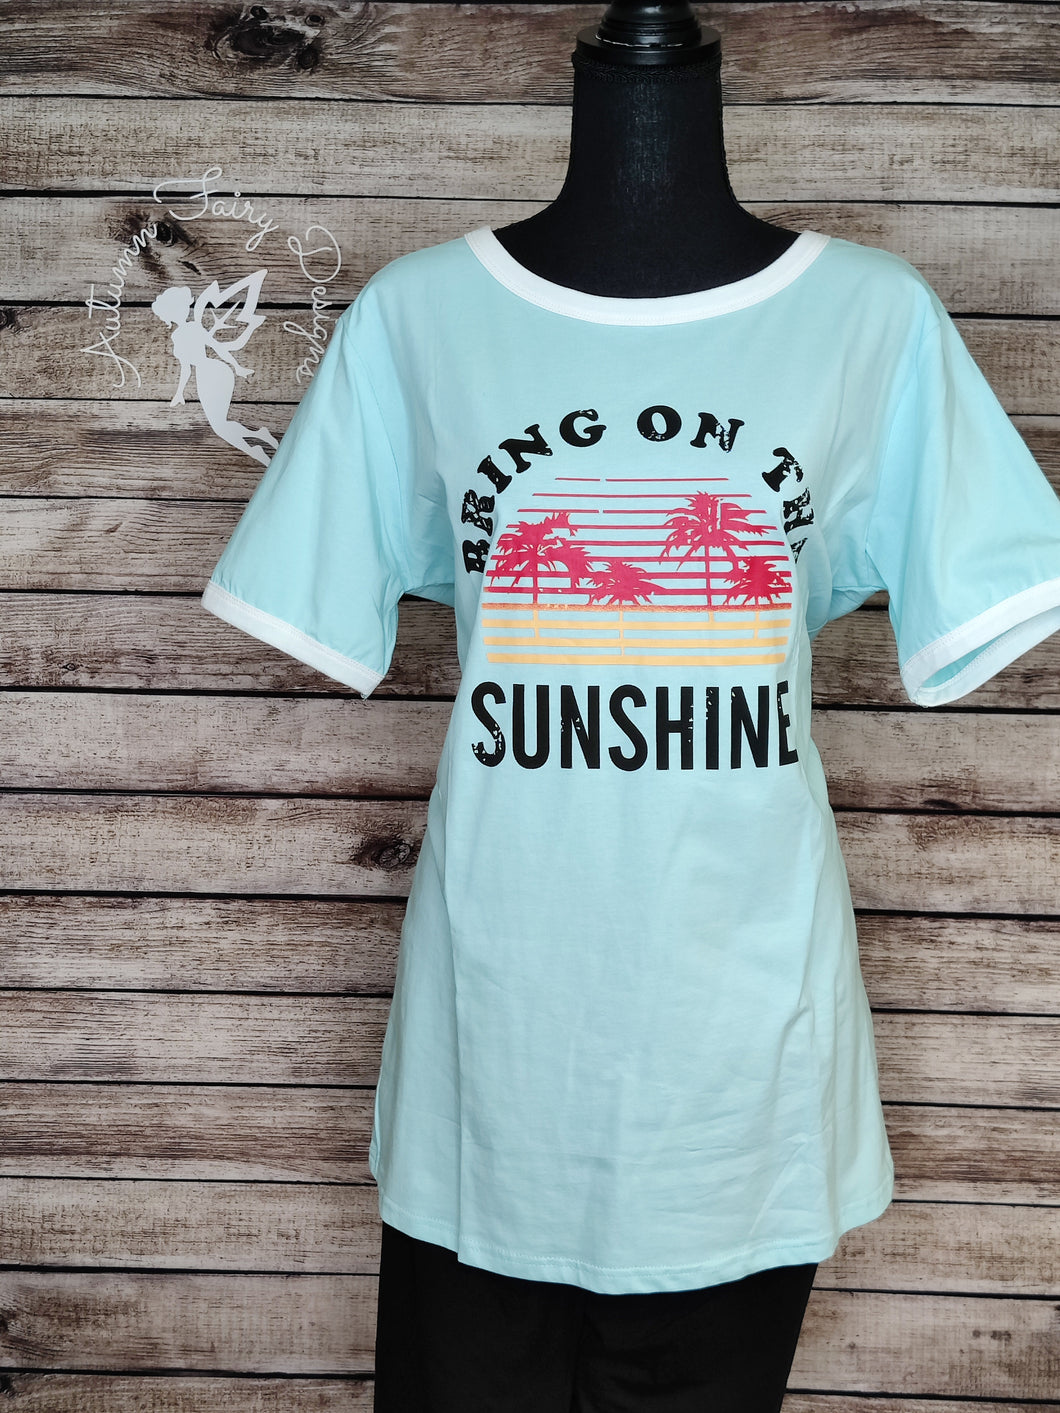 Bring on the Sunshine T-Shirt (Mint)